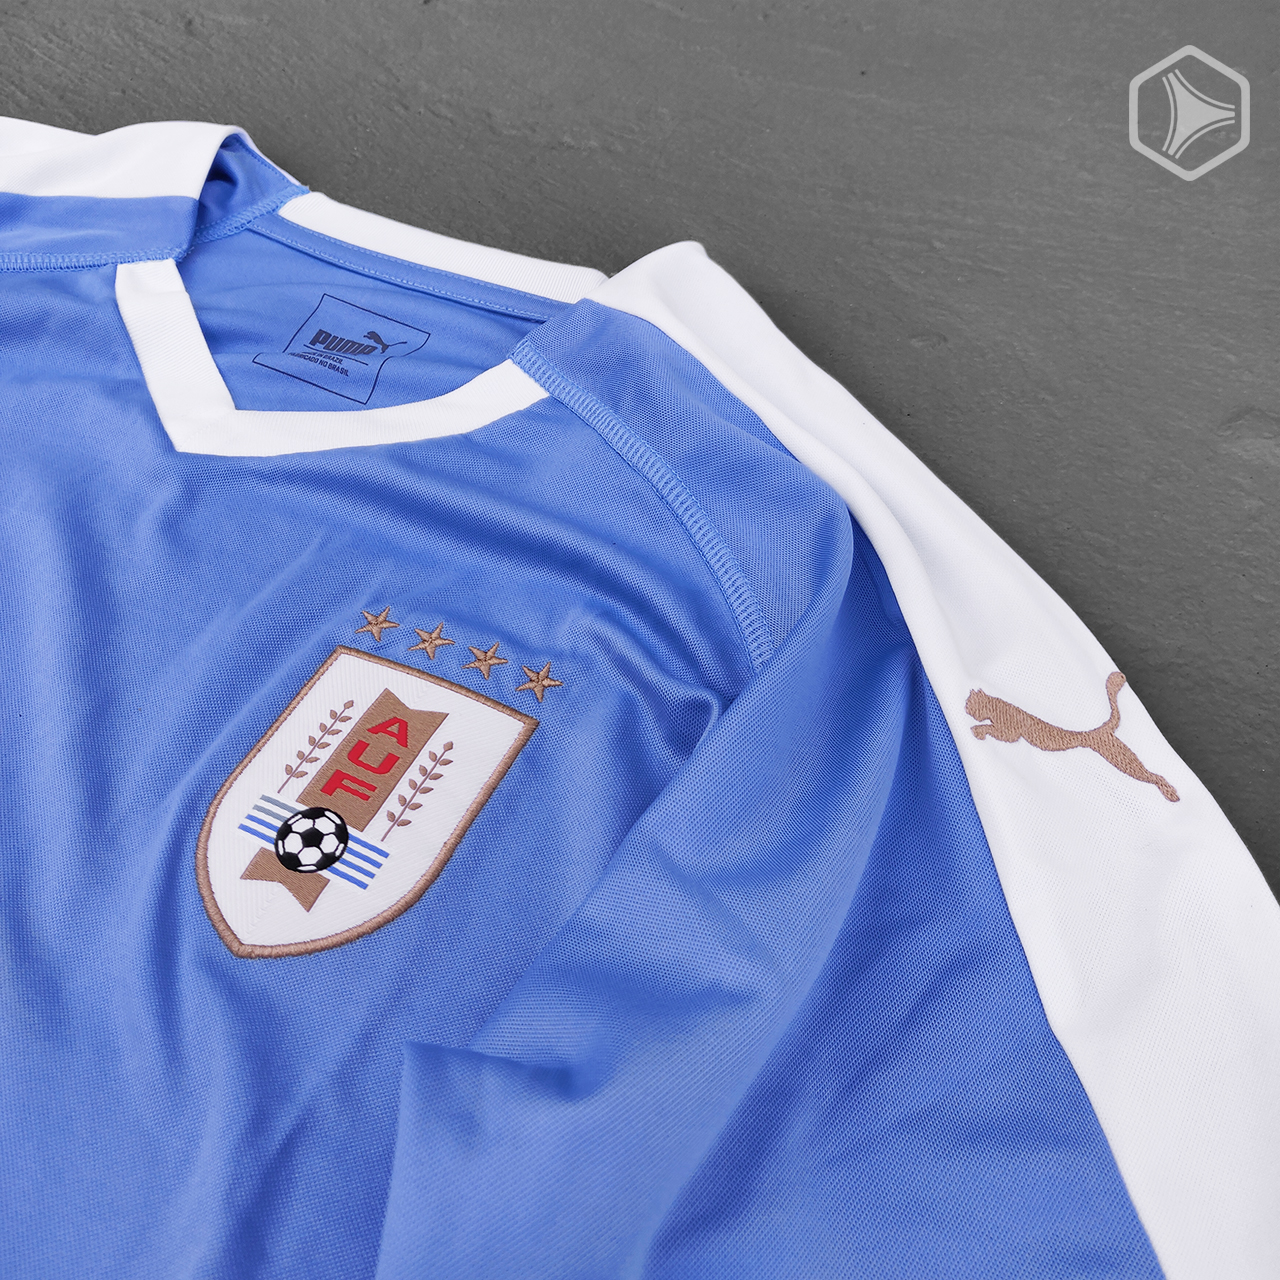 Camiseta PUMA de Uruguay Copa América 2019